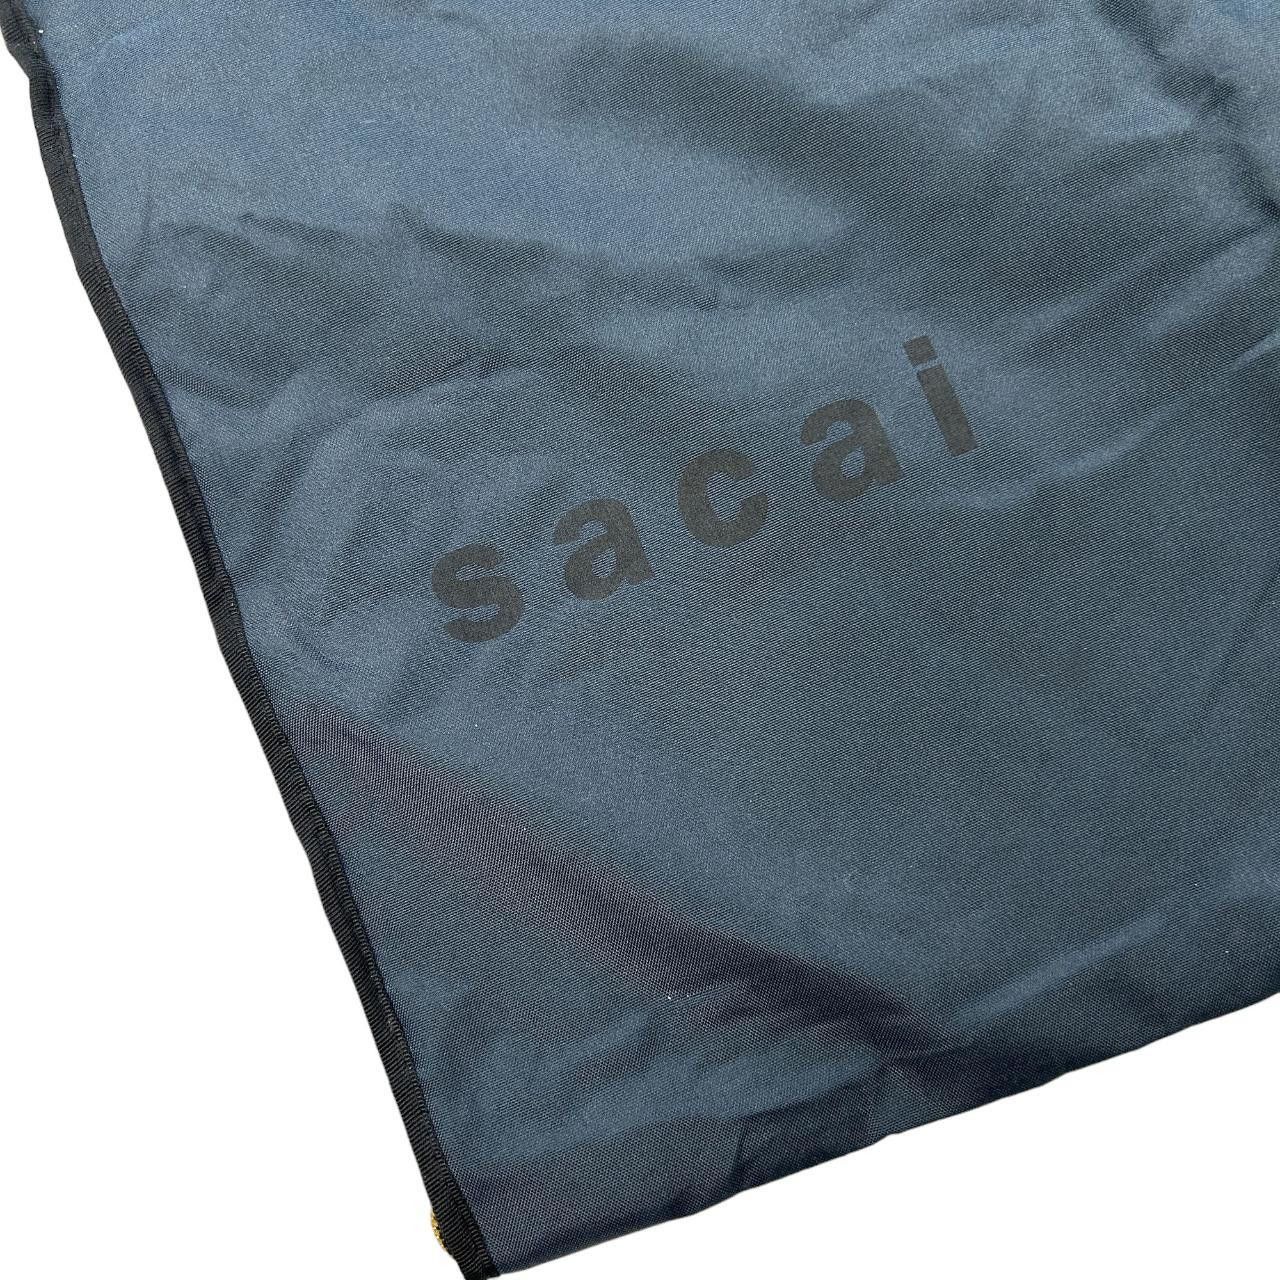 Sacai Vintage Sacai The North Face Collaboration Suit Dress Bag Size ONE SIZE - 2 Preview